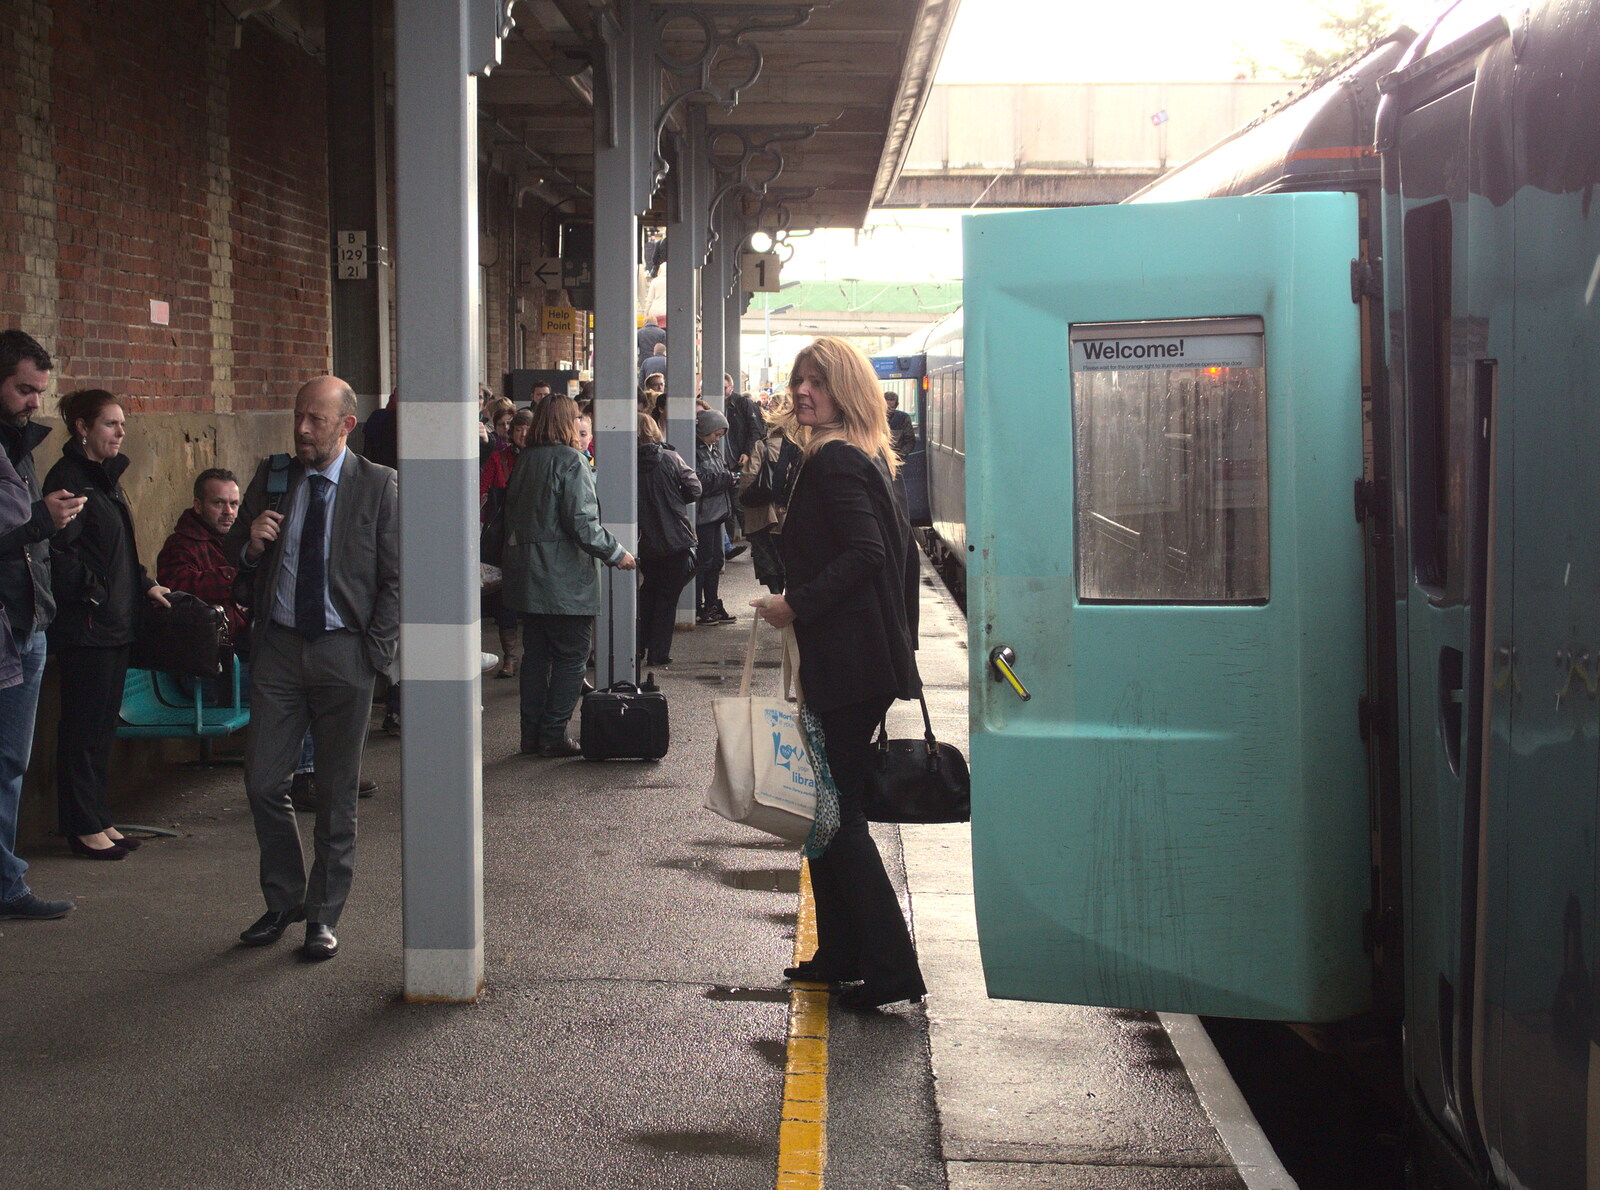 Passengers get off at Stowmarket from (Very) Long Train (Not) Running, Stowmarket, Suffolk - 21st October 2014